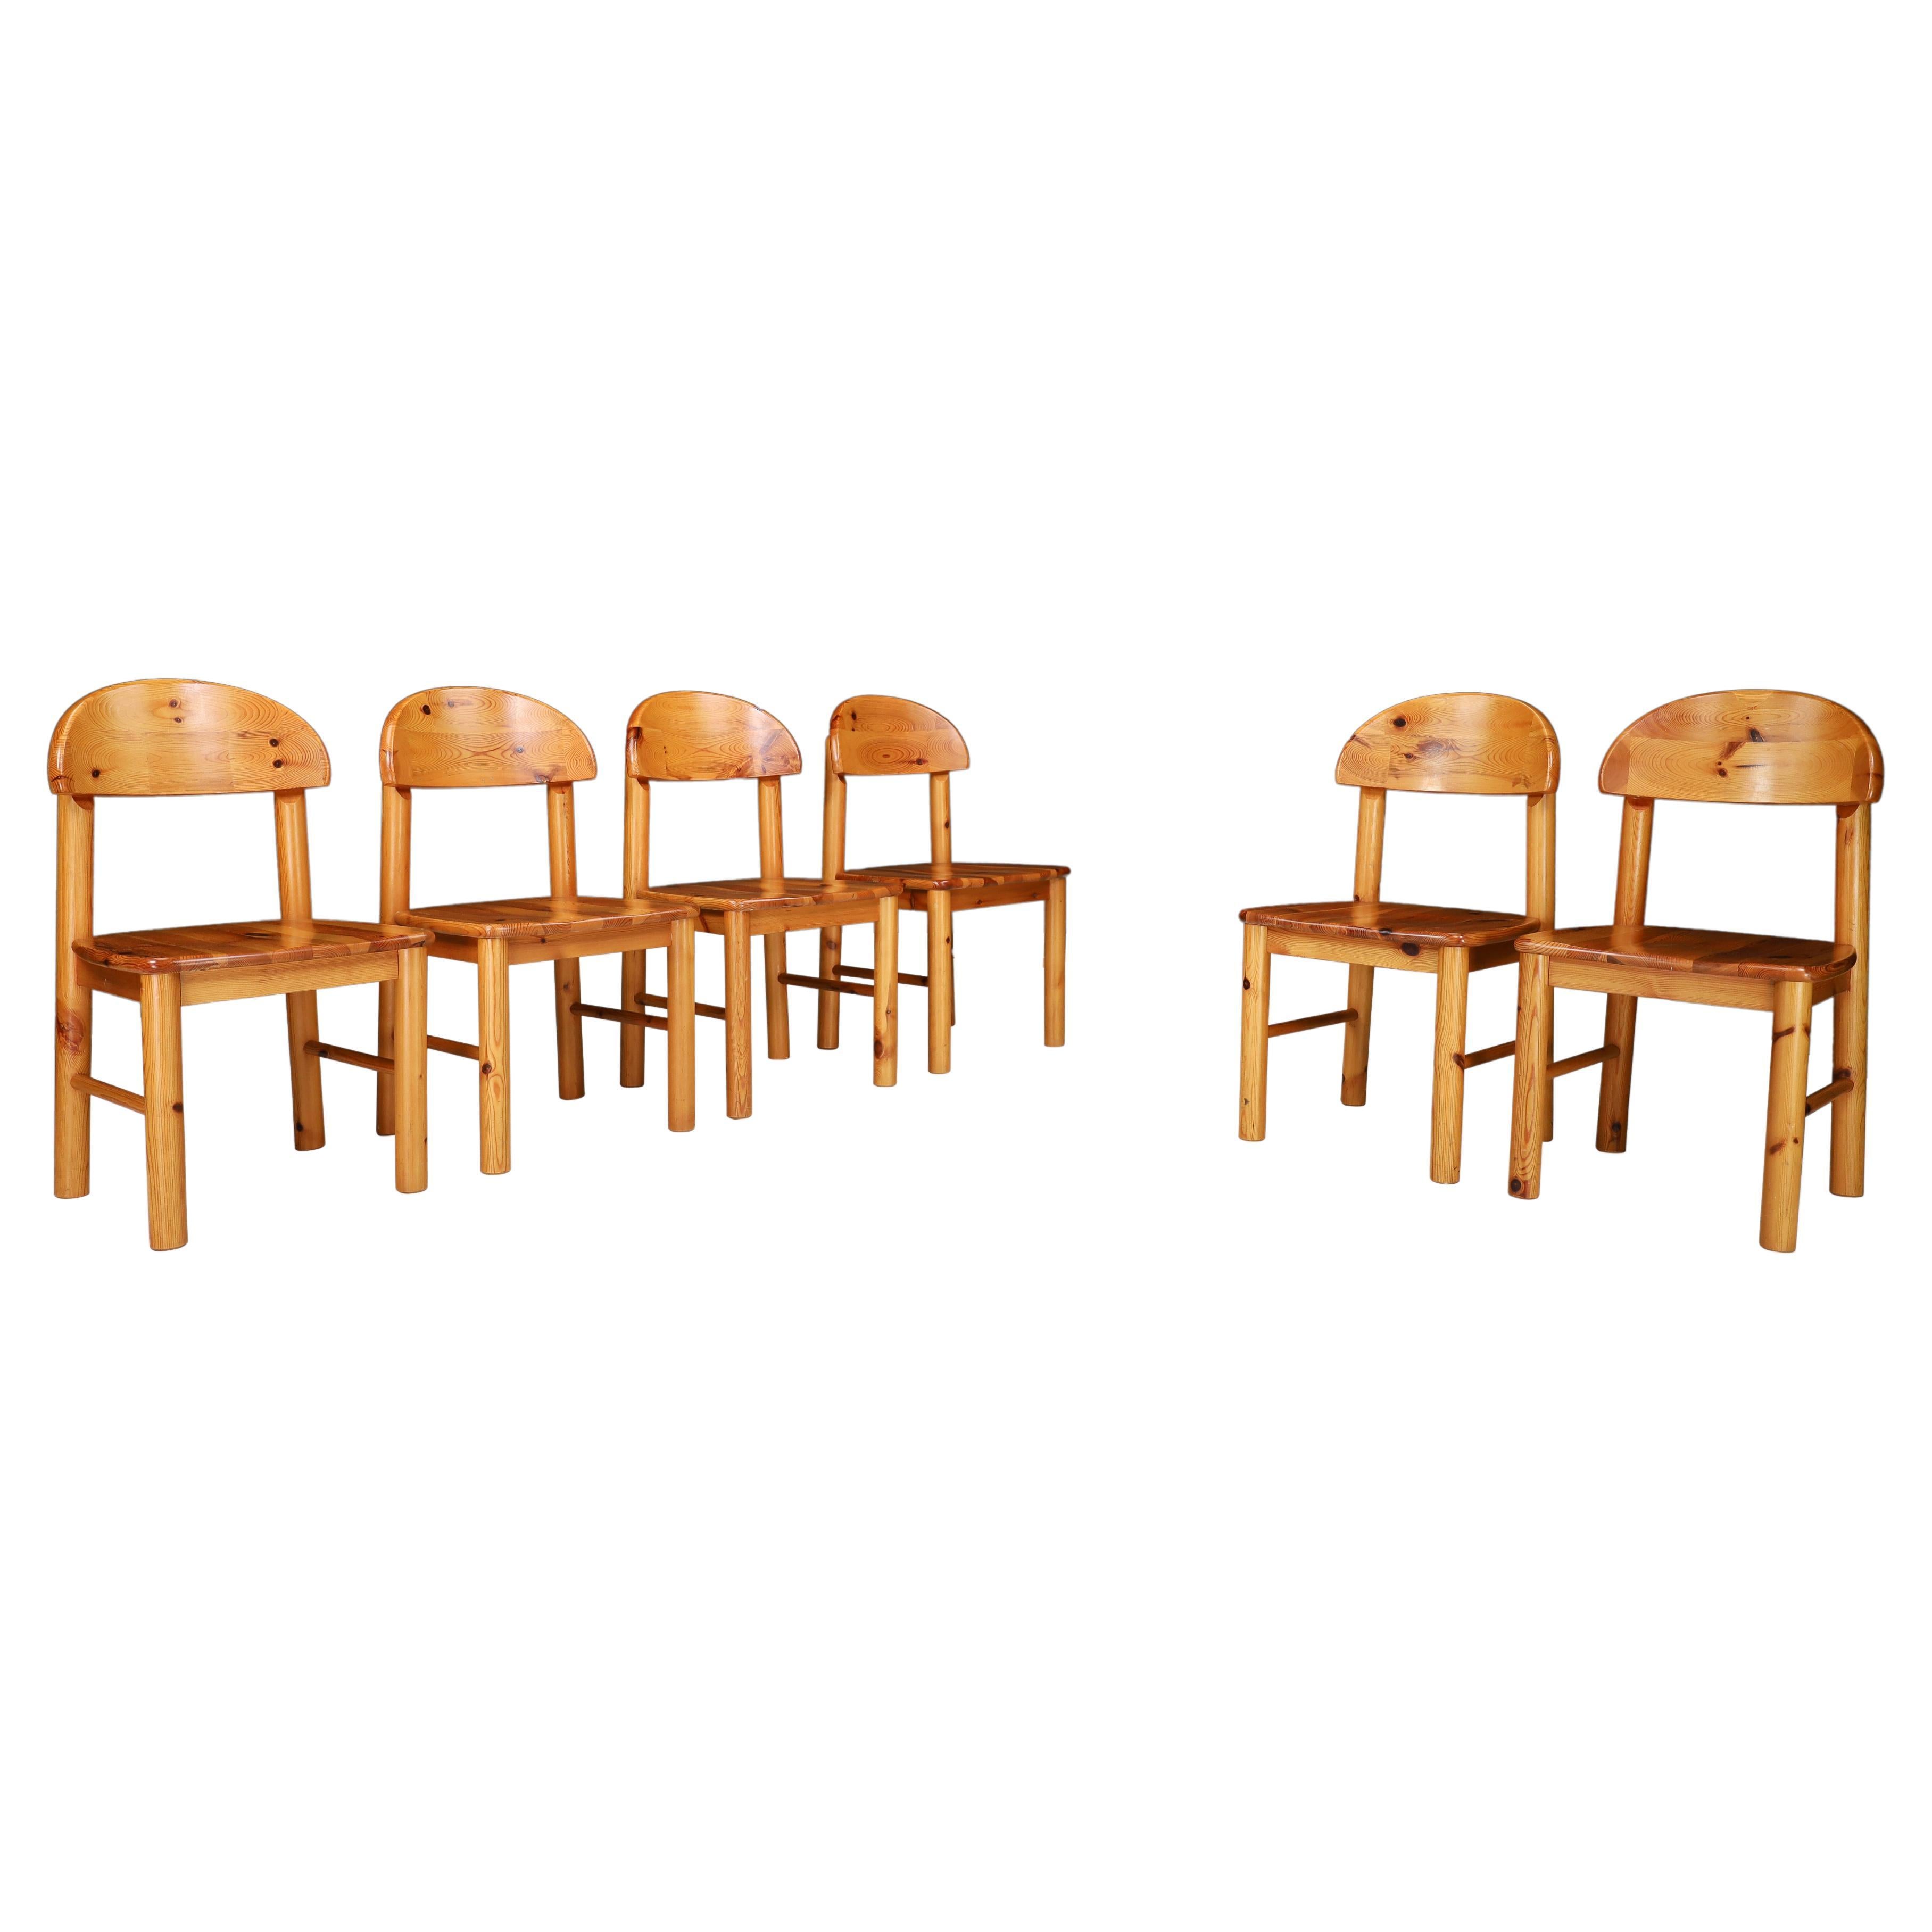 Rainer Daumiller Dining Chairs in Pine, Denmark, 1970s